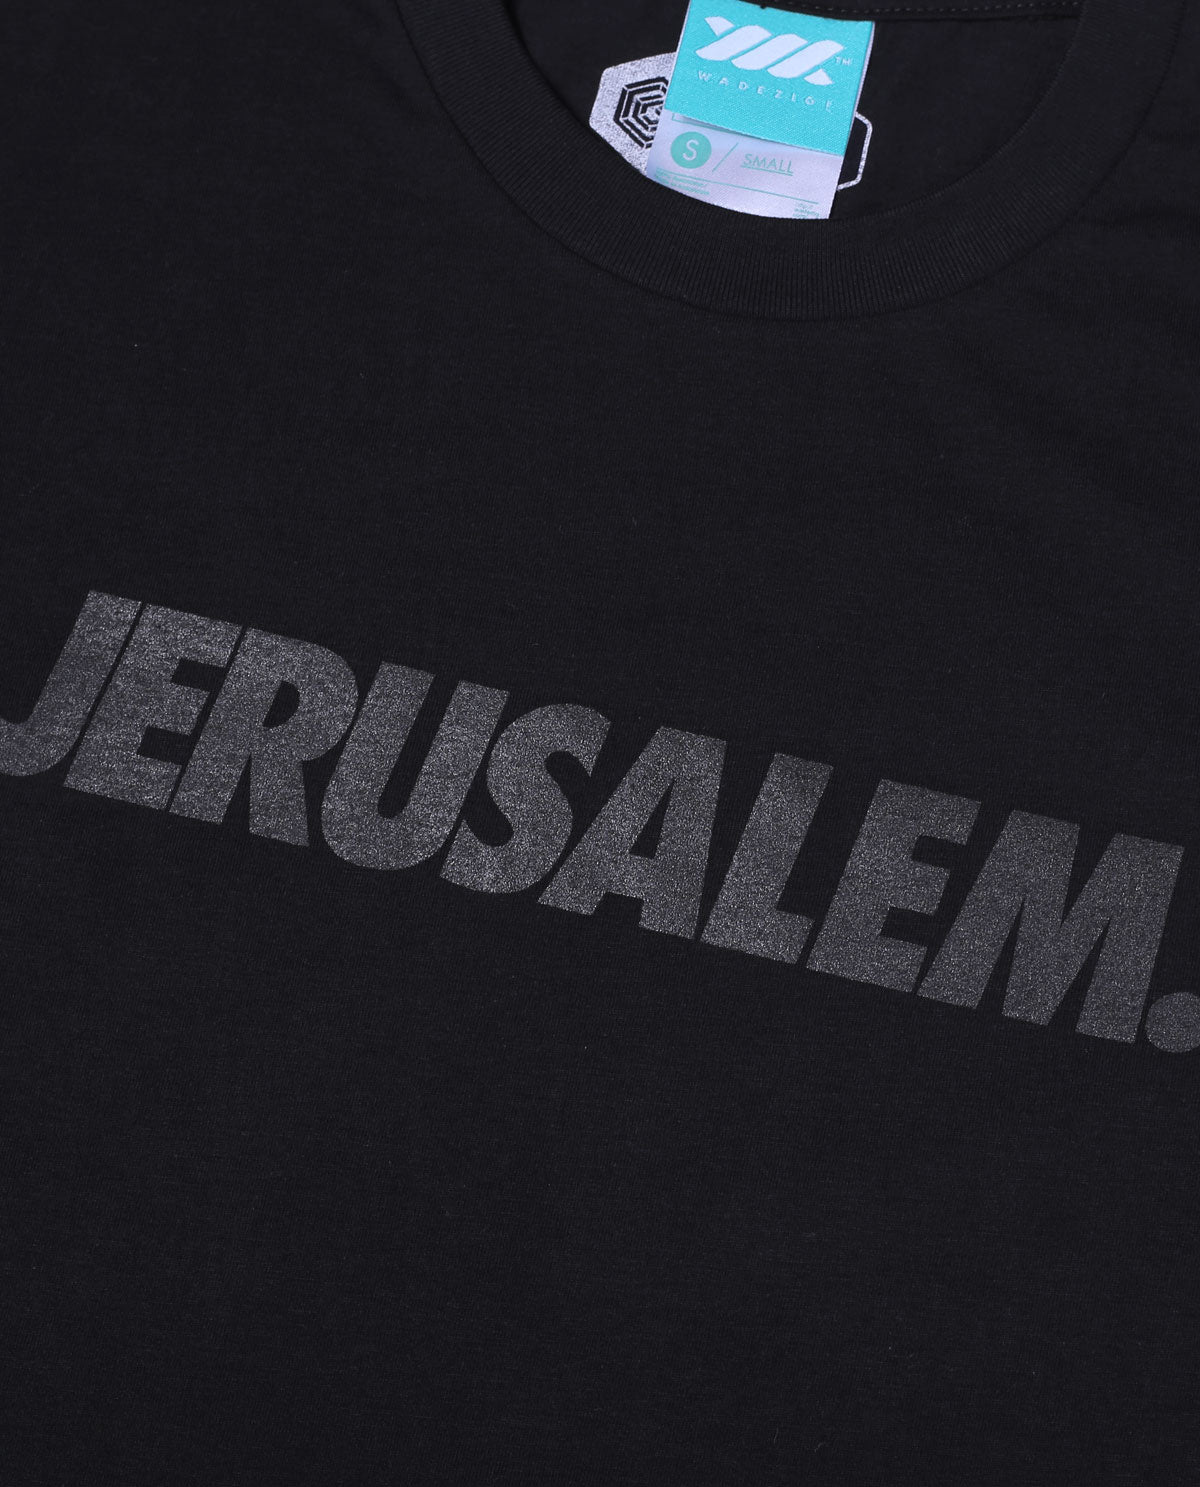 WADEZIG! T-SHIRT - JERUSALEM BLACK ON BLACK